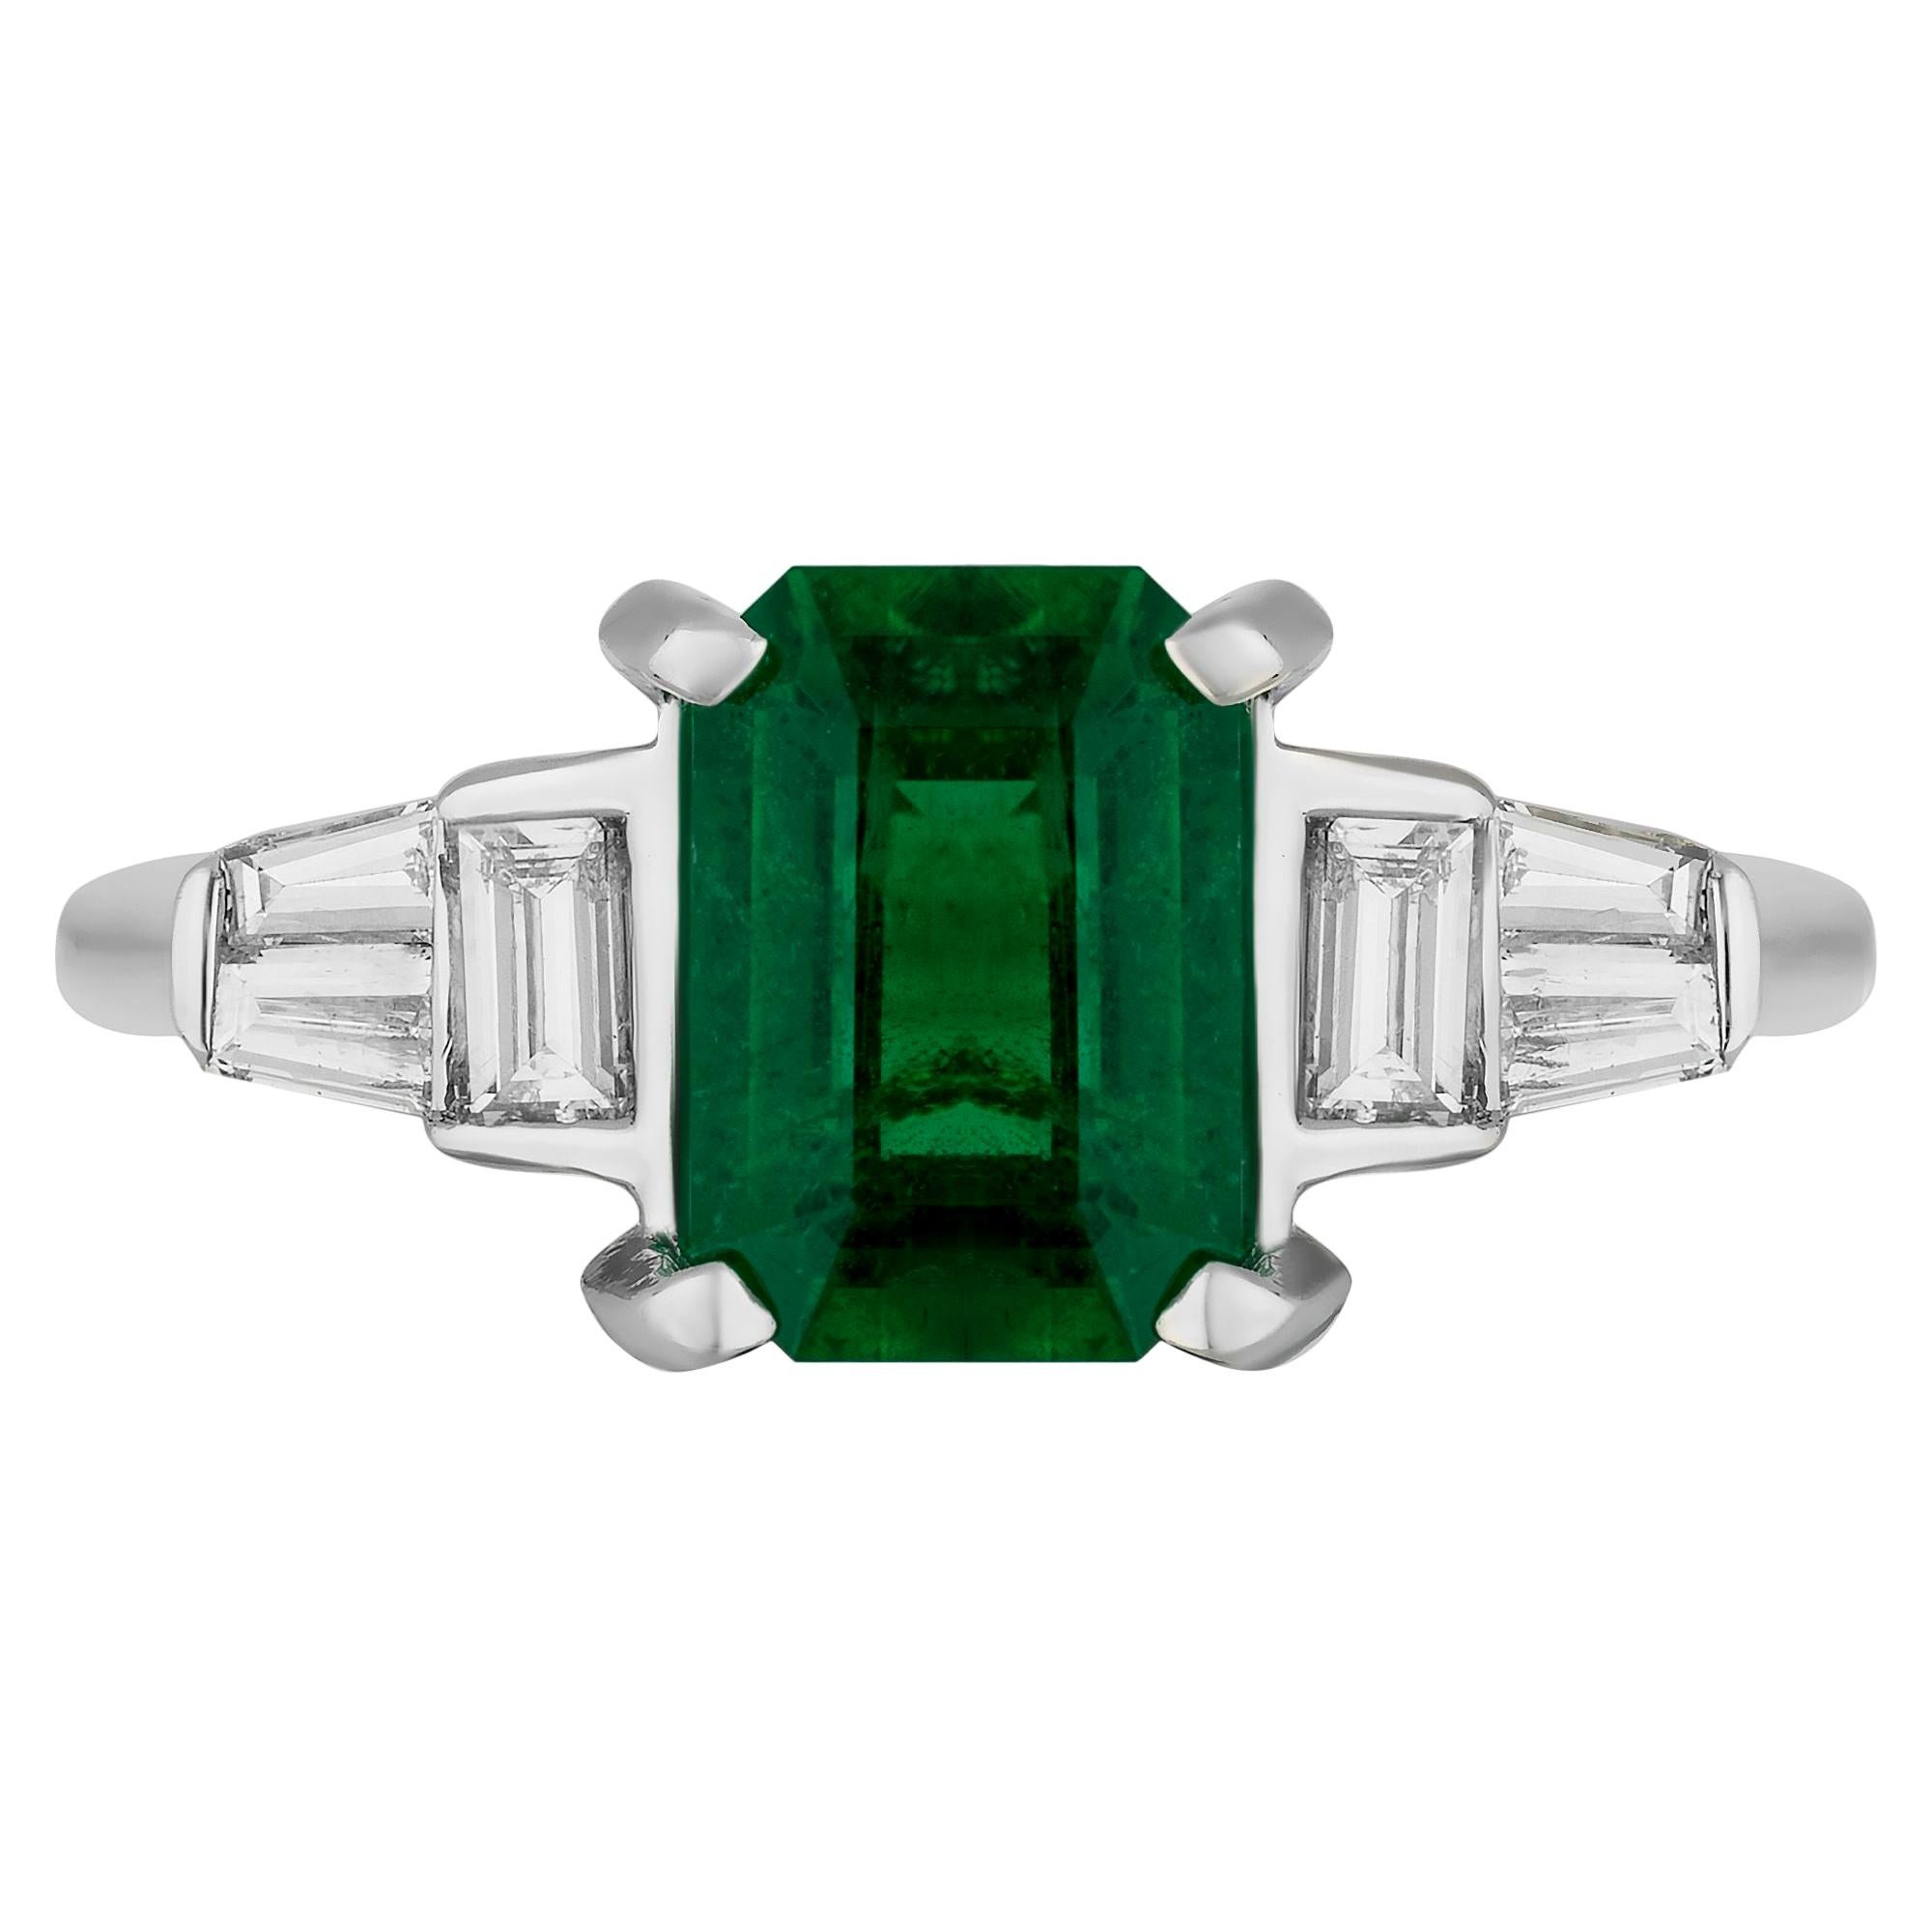 1.85 Carat Emerald Diamond Cocktail Ring